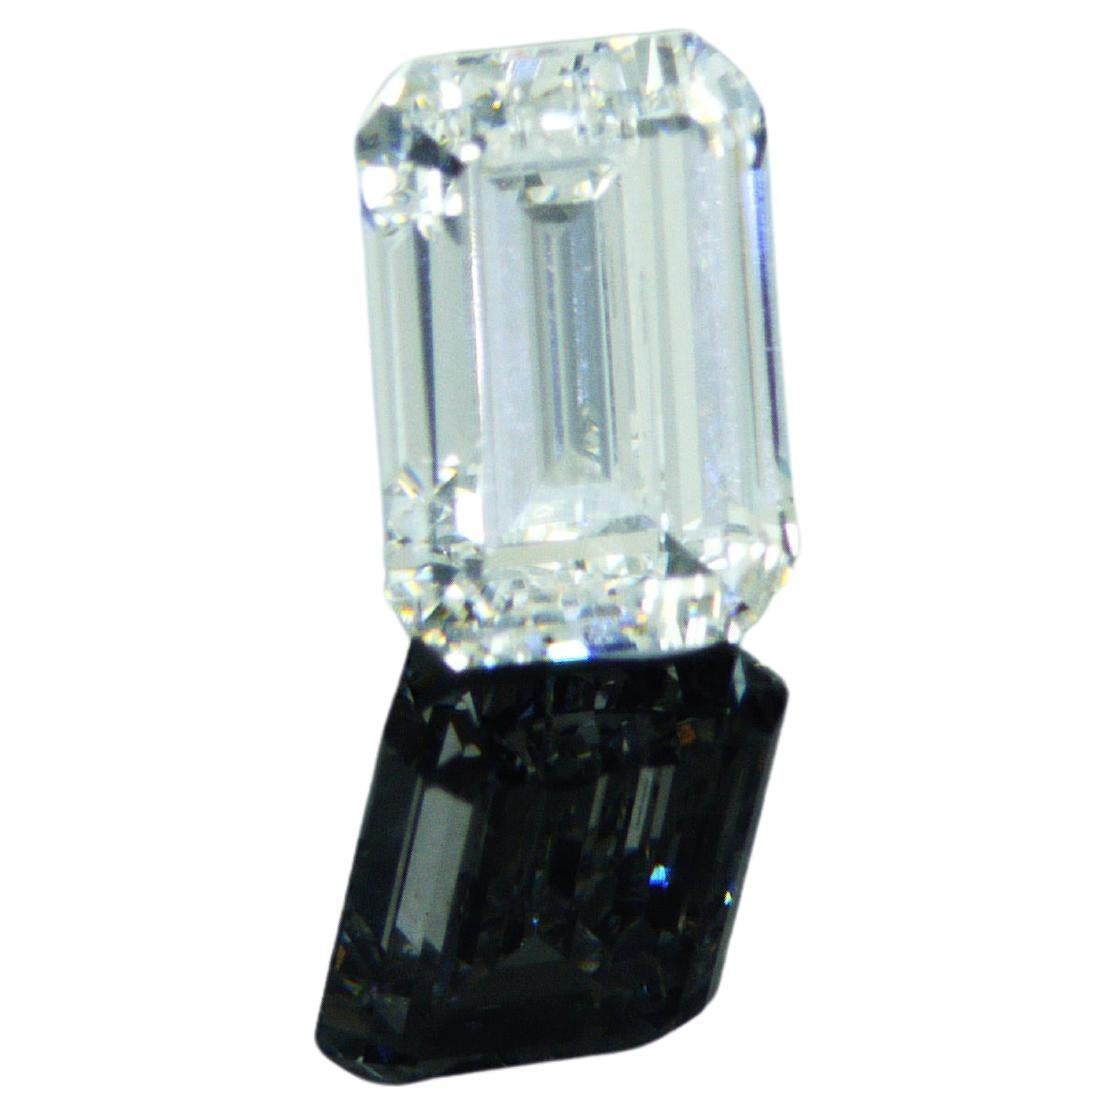 HRDAntwerp certified 0.93 carat Emerald Shape Natural Diamond E Loop Clean (IF)